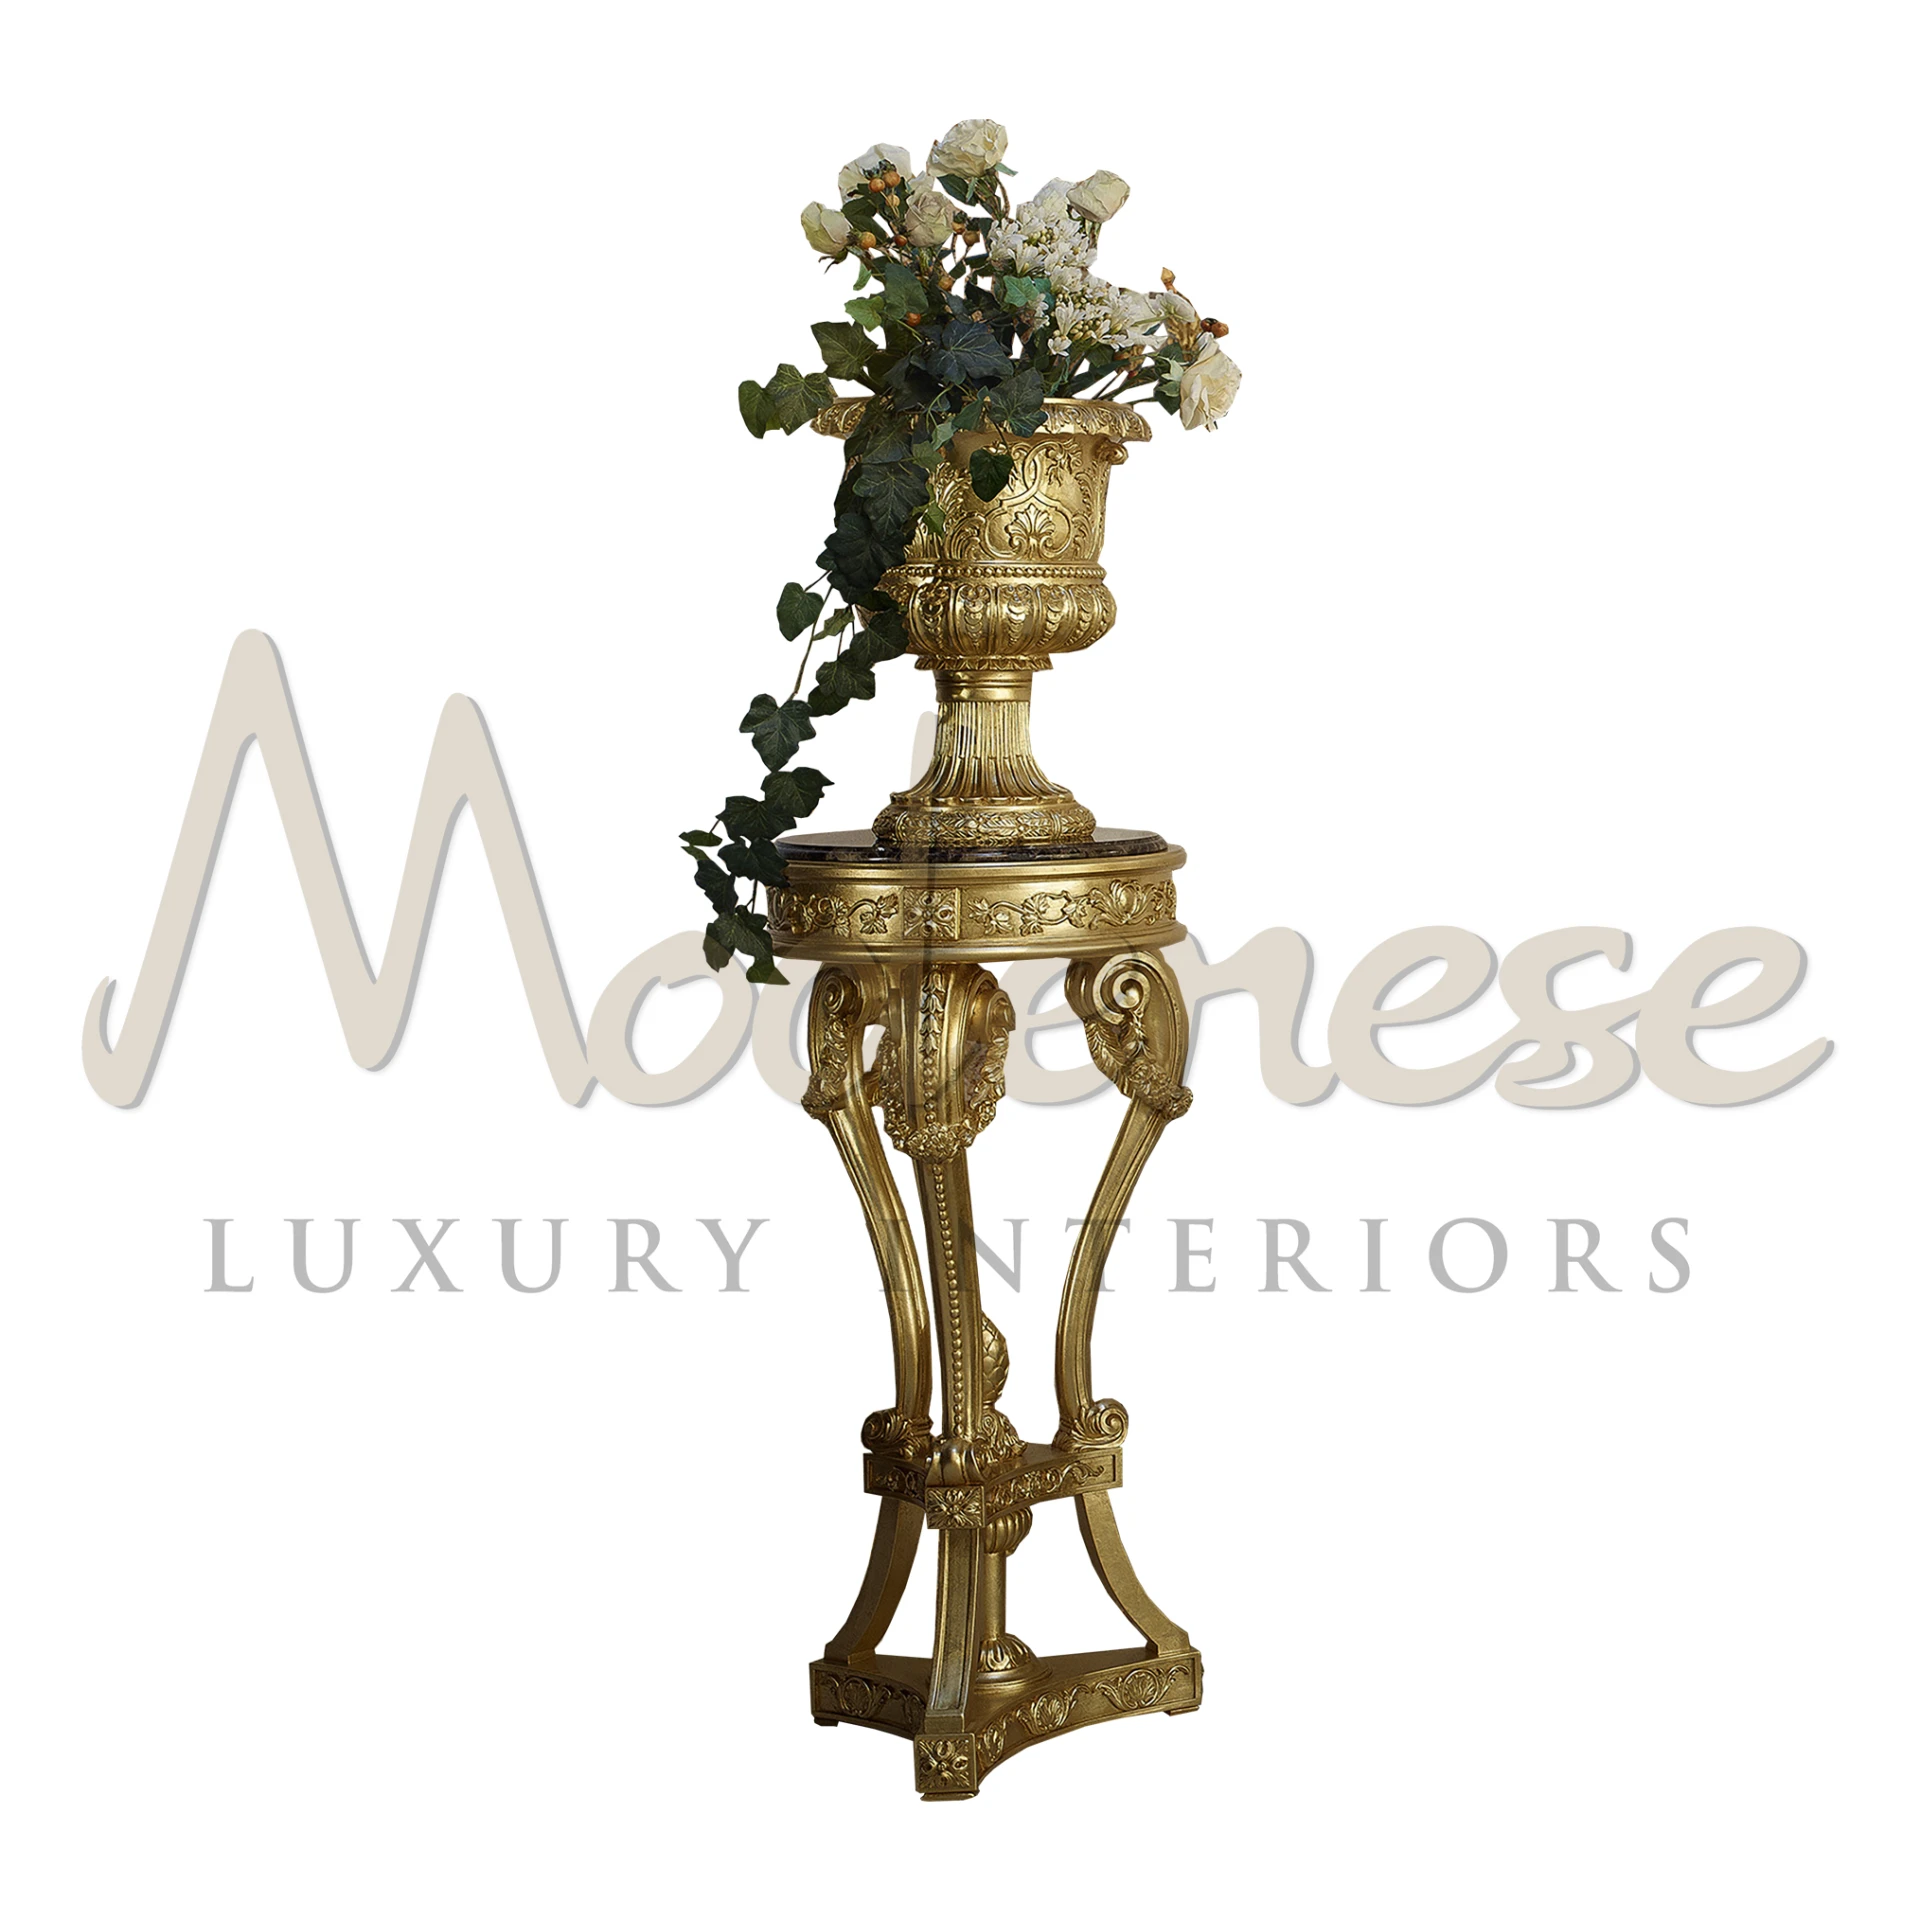 Luxurious Italian Villa Rococò Column Vase Stand for Elegant Interiors